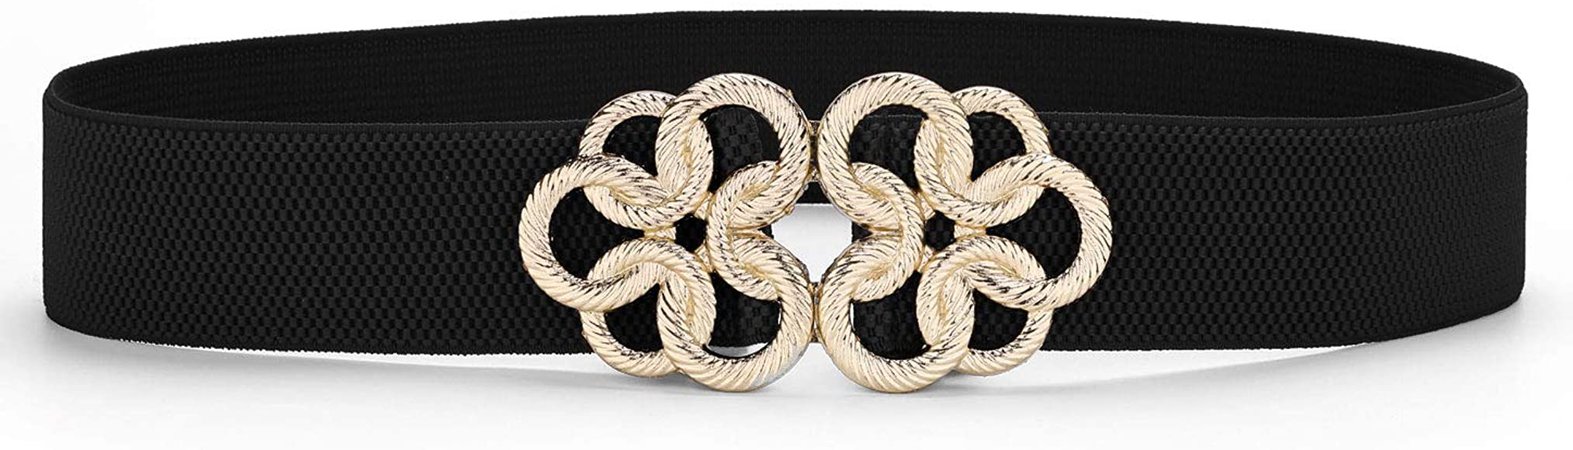 black elastic cinch belt gold buckle - Google Search